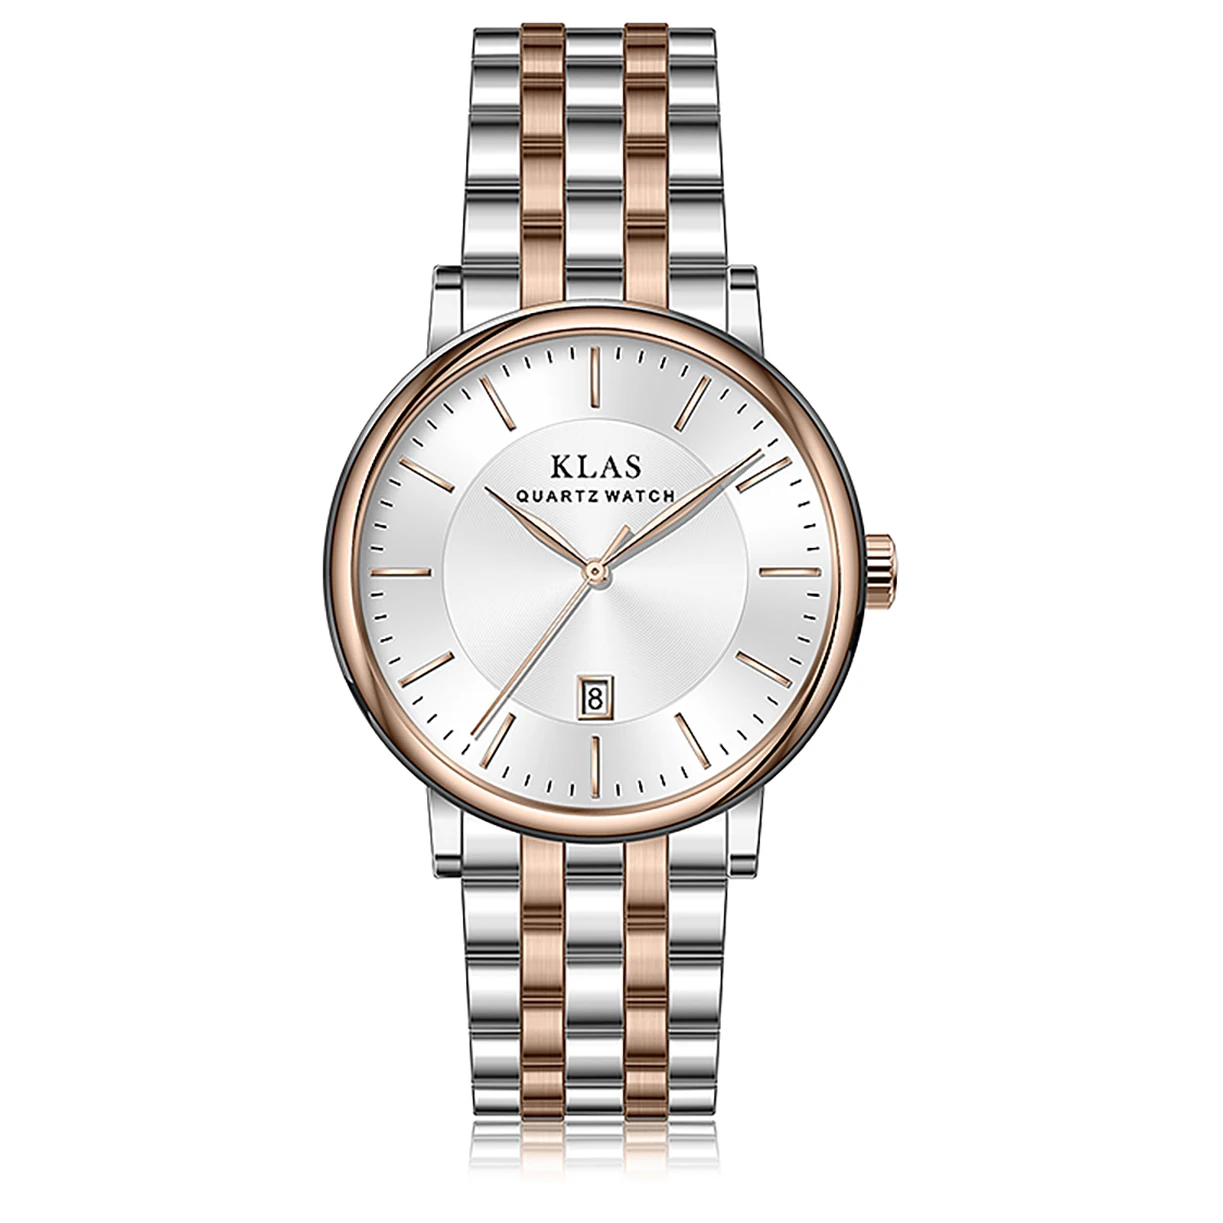 Luxury Fashion Quartz Watch men's stainless steel embossed dial waterproof watch  KLAS Brand